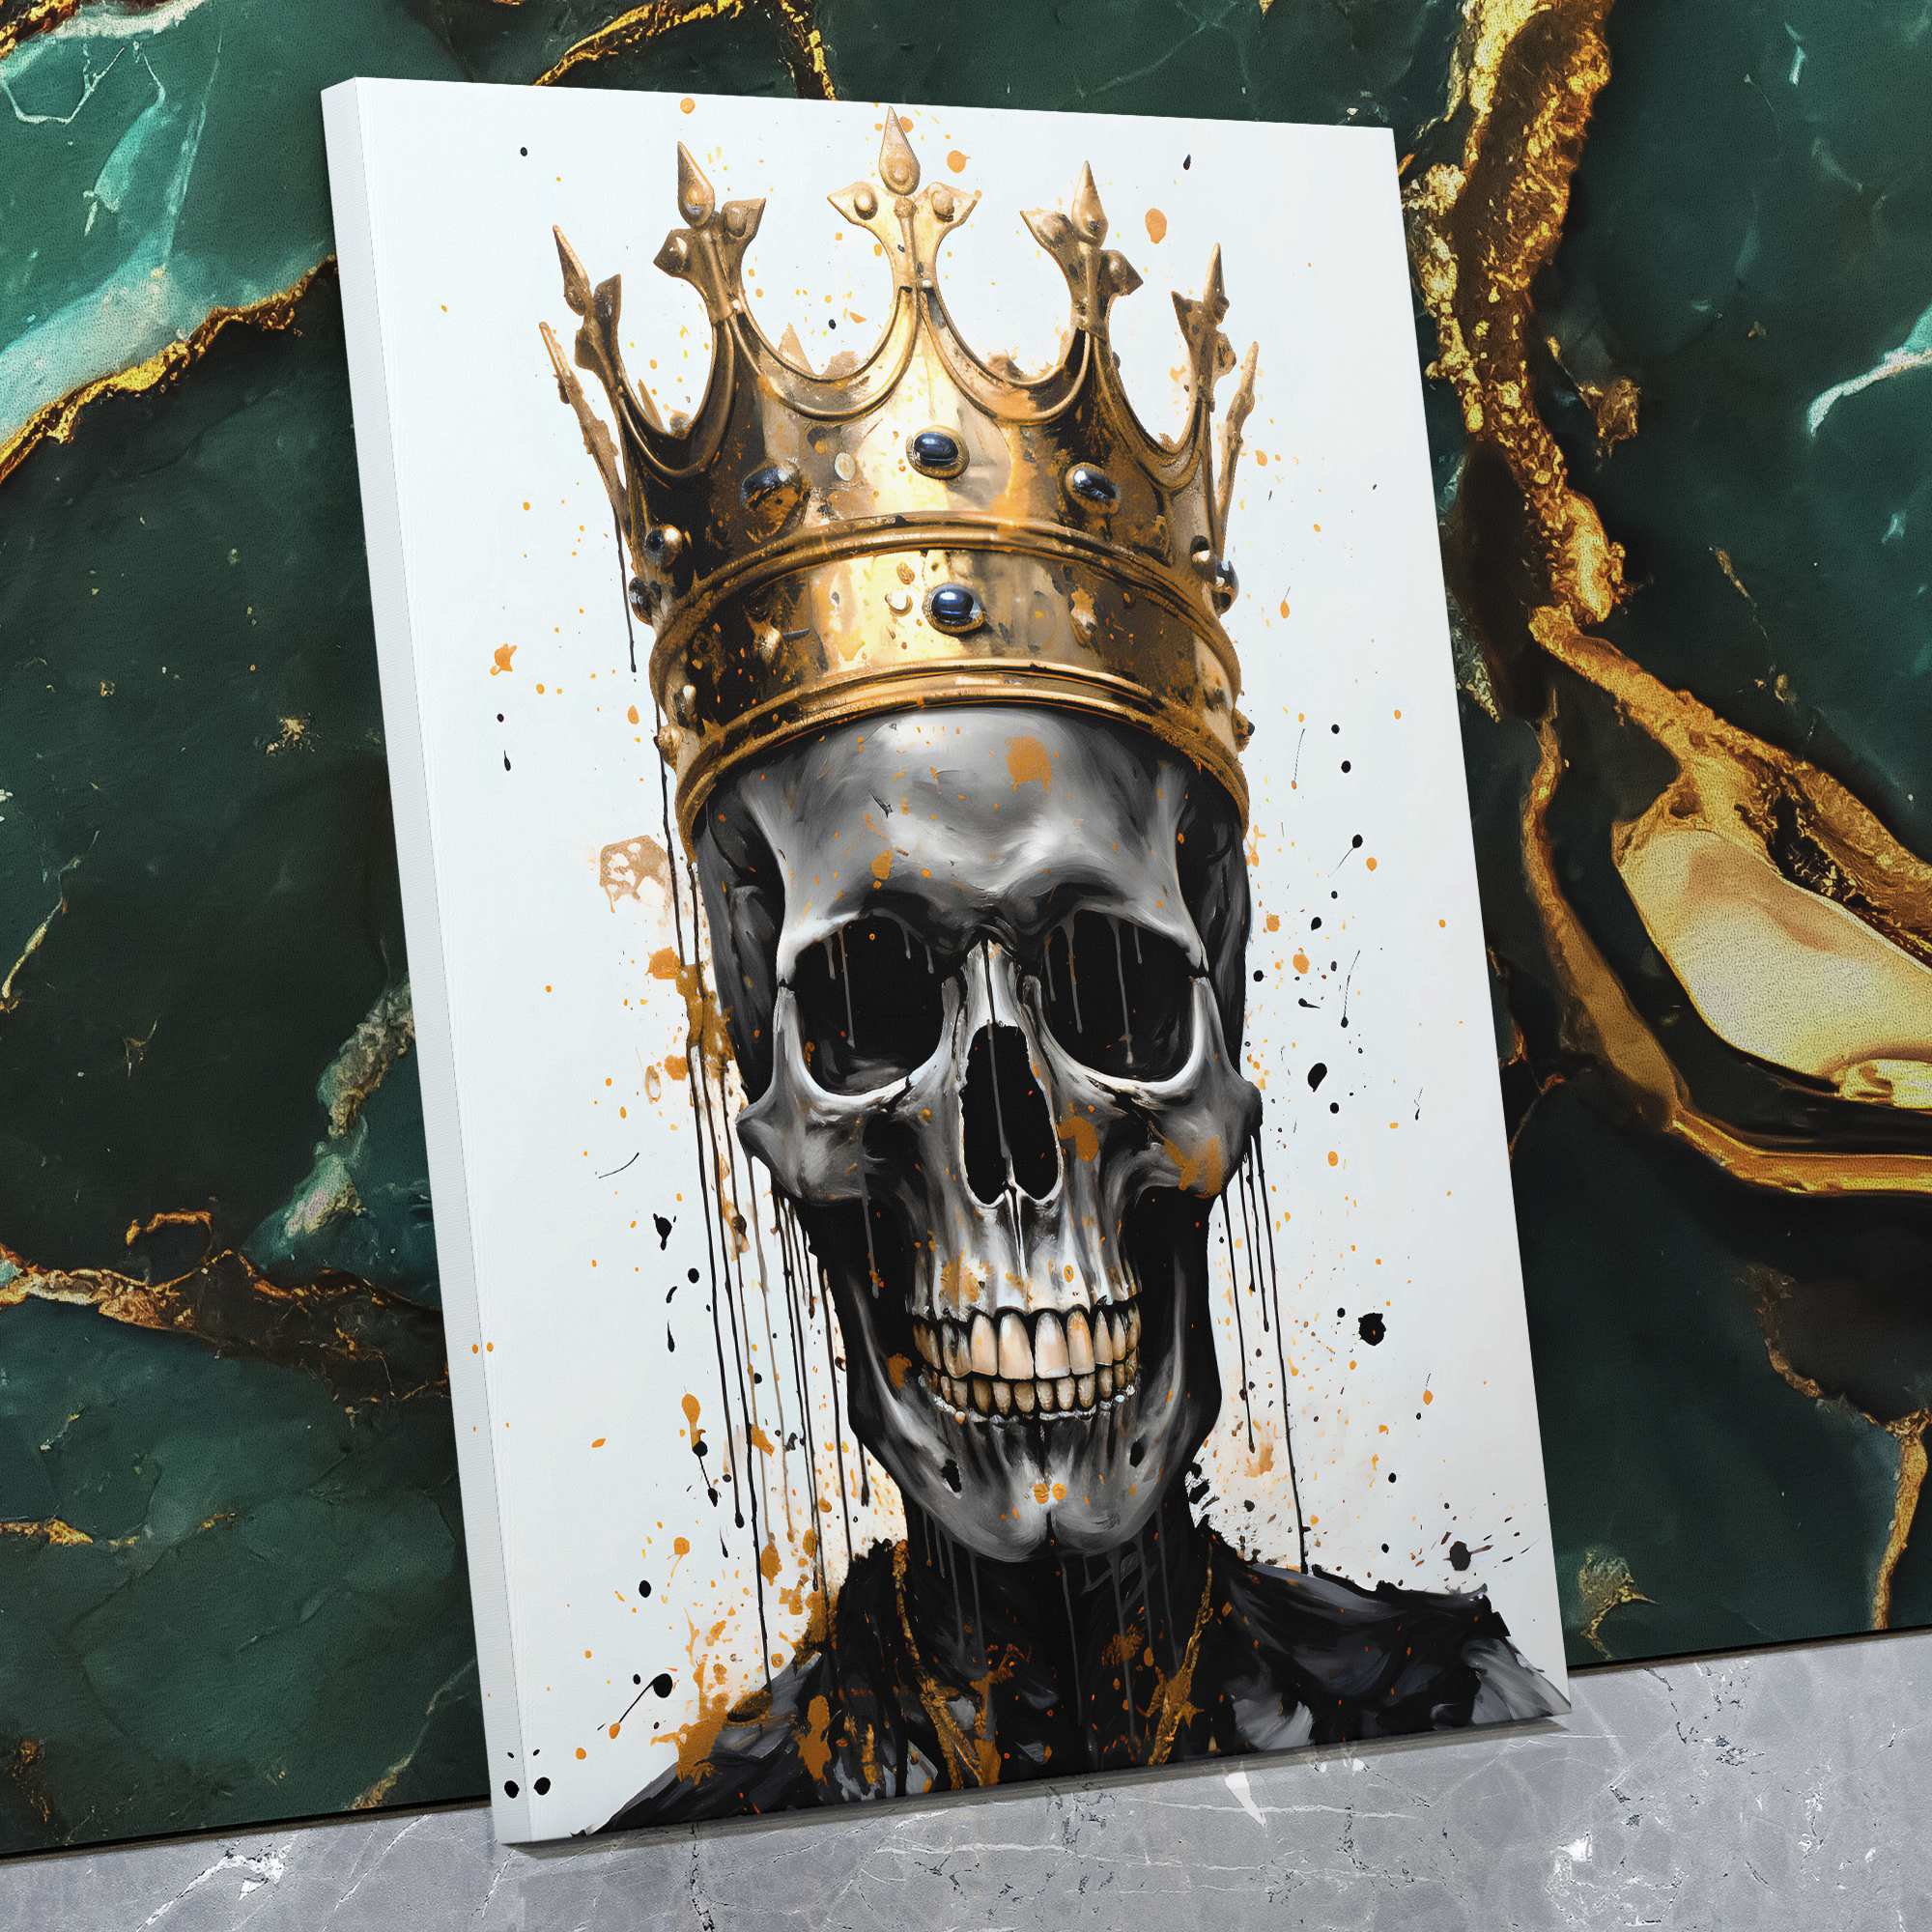 King of Bones - Luxury Wall Art - Canvas Print